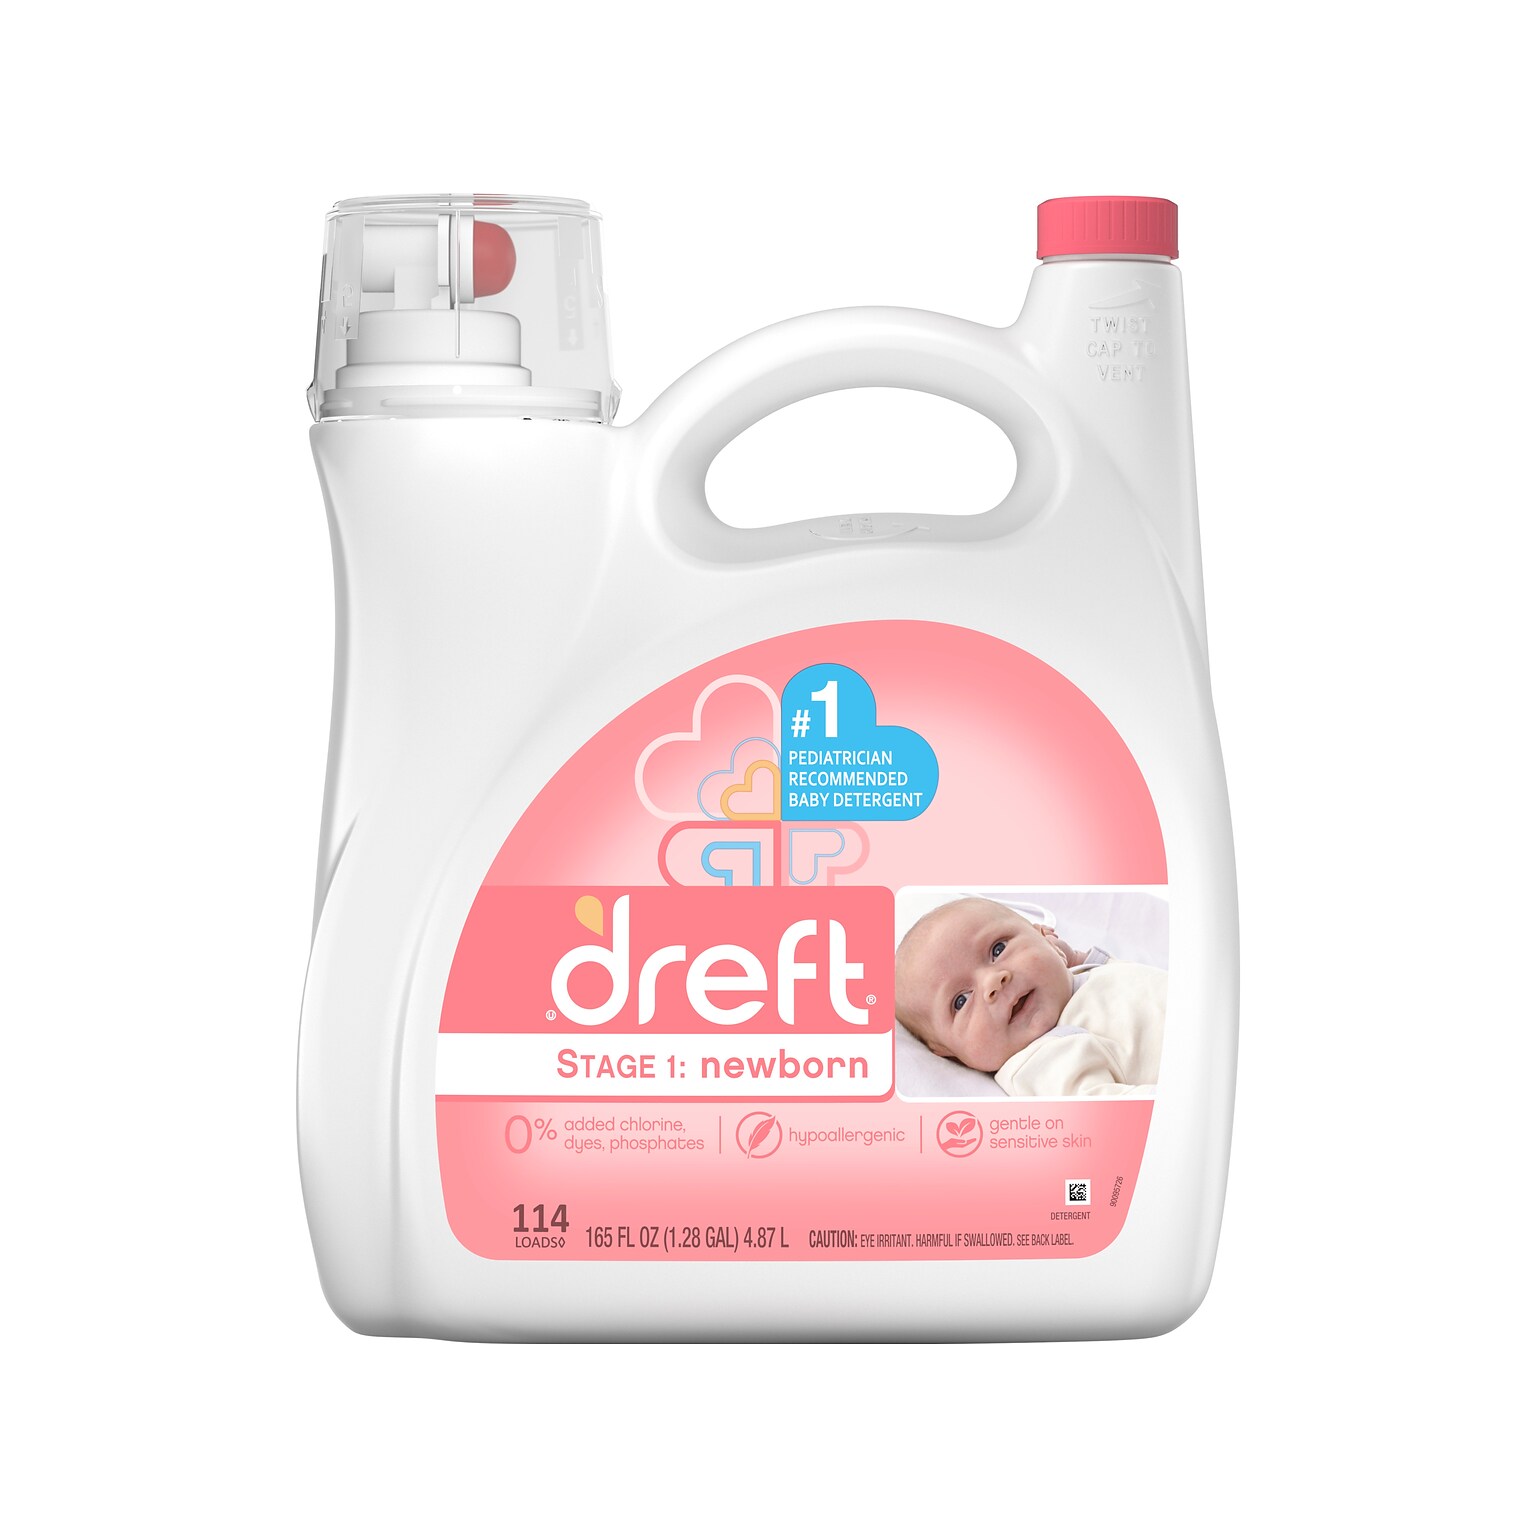 Dreft Newborn Baby HE Liquid Laundry Detergent, Gentle on Sensitive Skin, 150oz, 114 loads (12128)